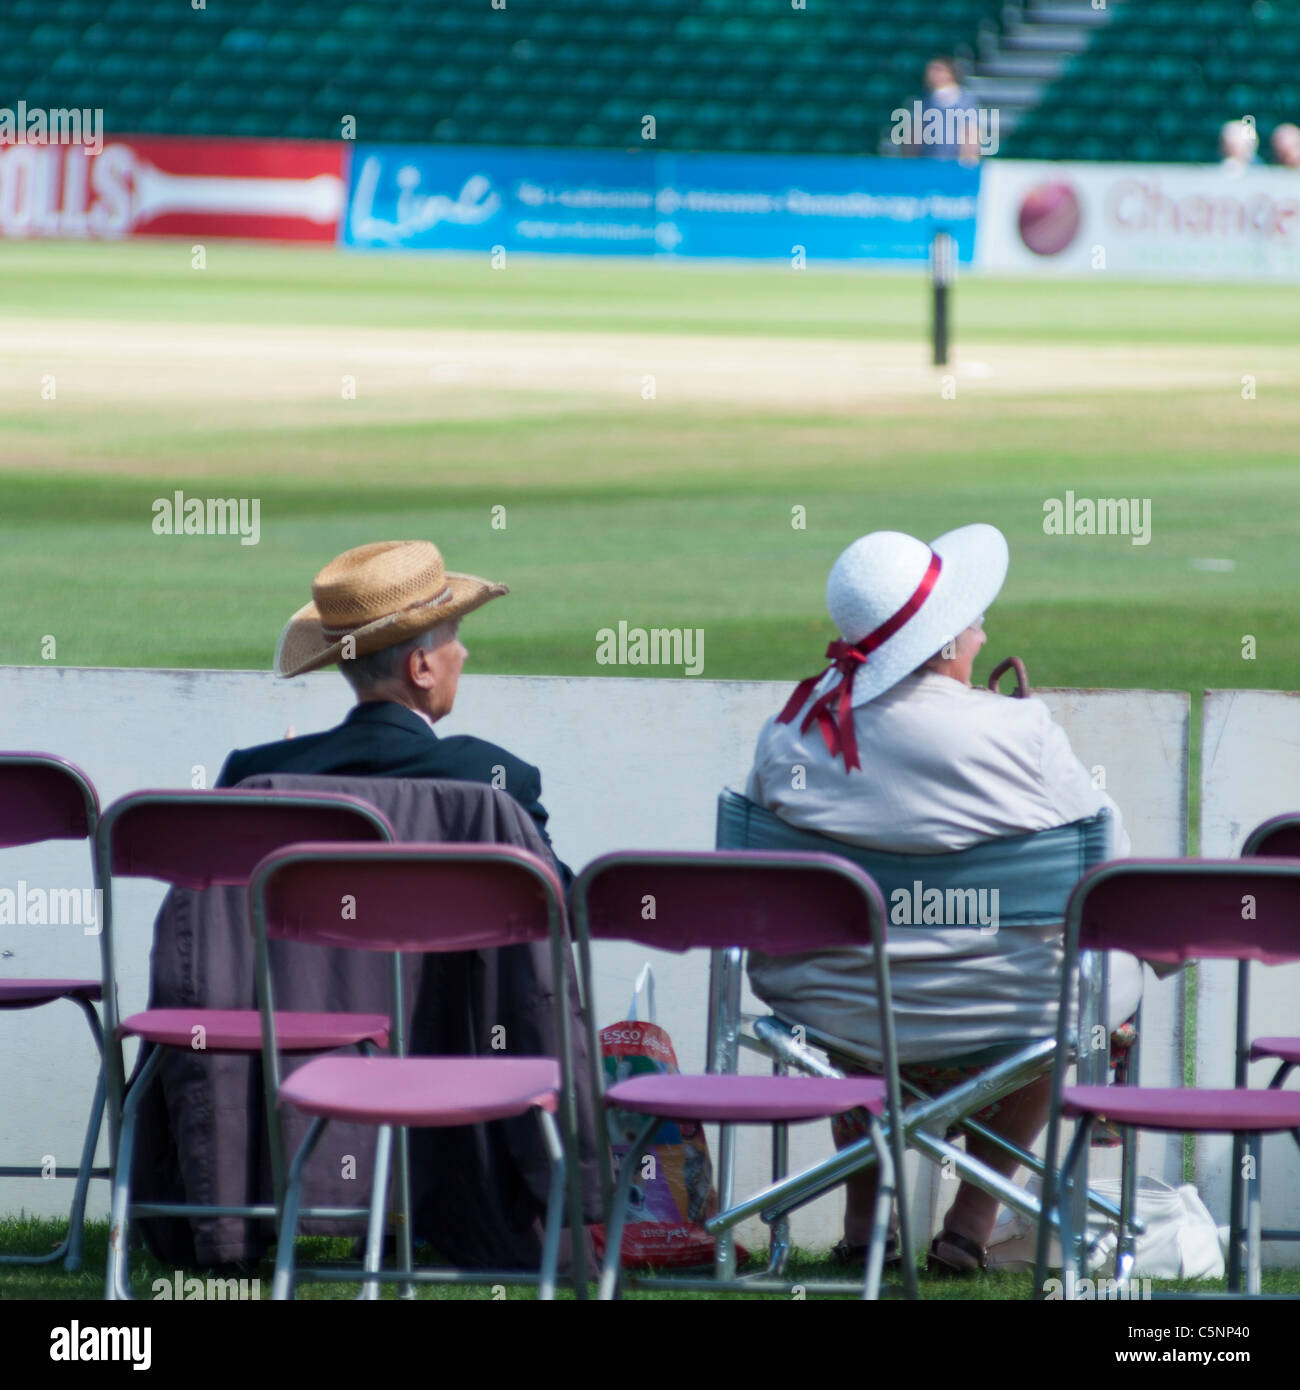 A very English scene at Cheltenham's cricket ground, Gloucestershire, UK. Stock Photo